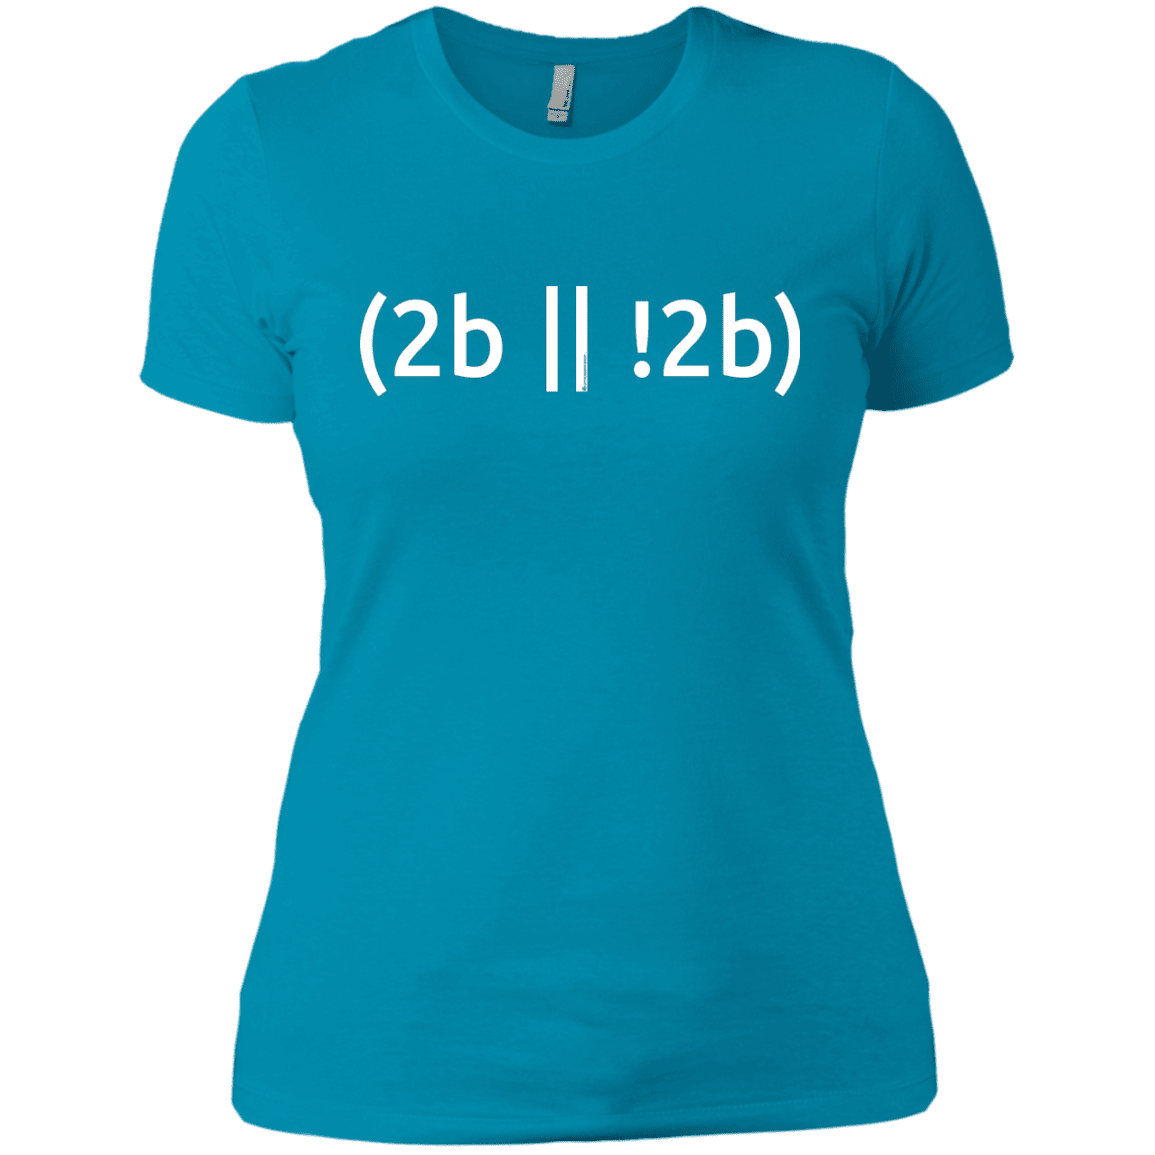 T-Shirts Turquoise / X-Small 2b Or Not 2b Women's Premium T-Shirt